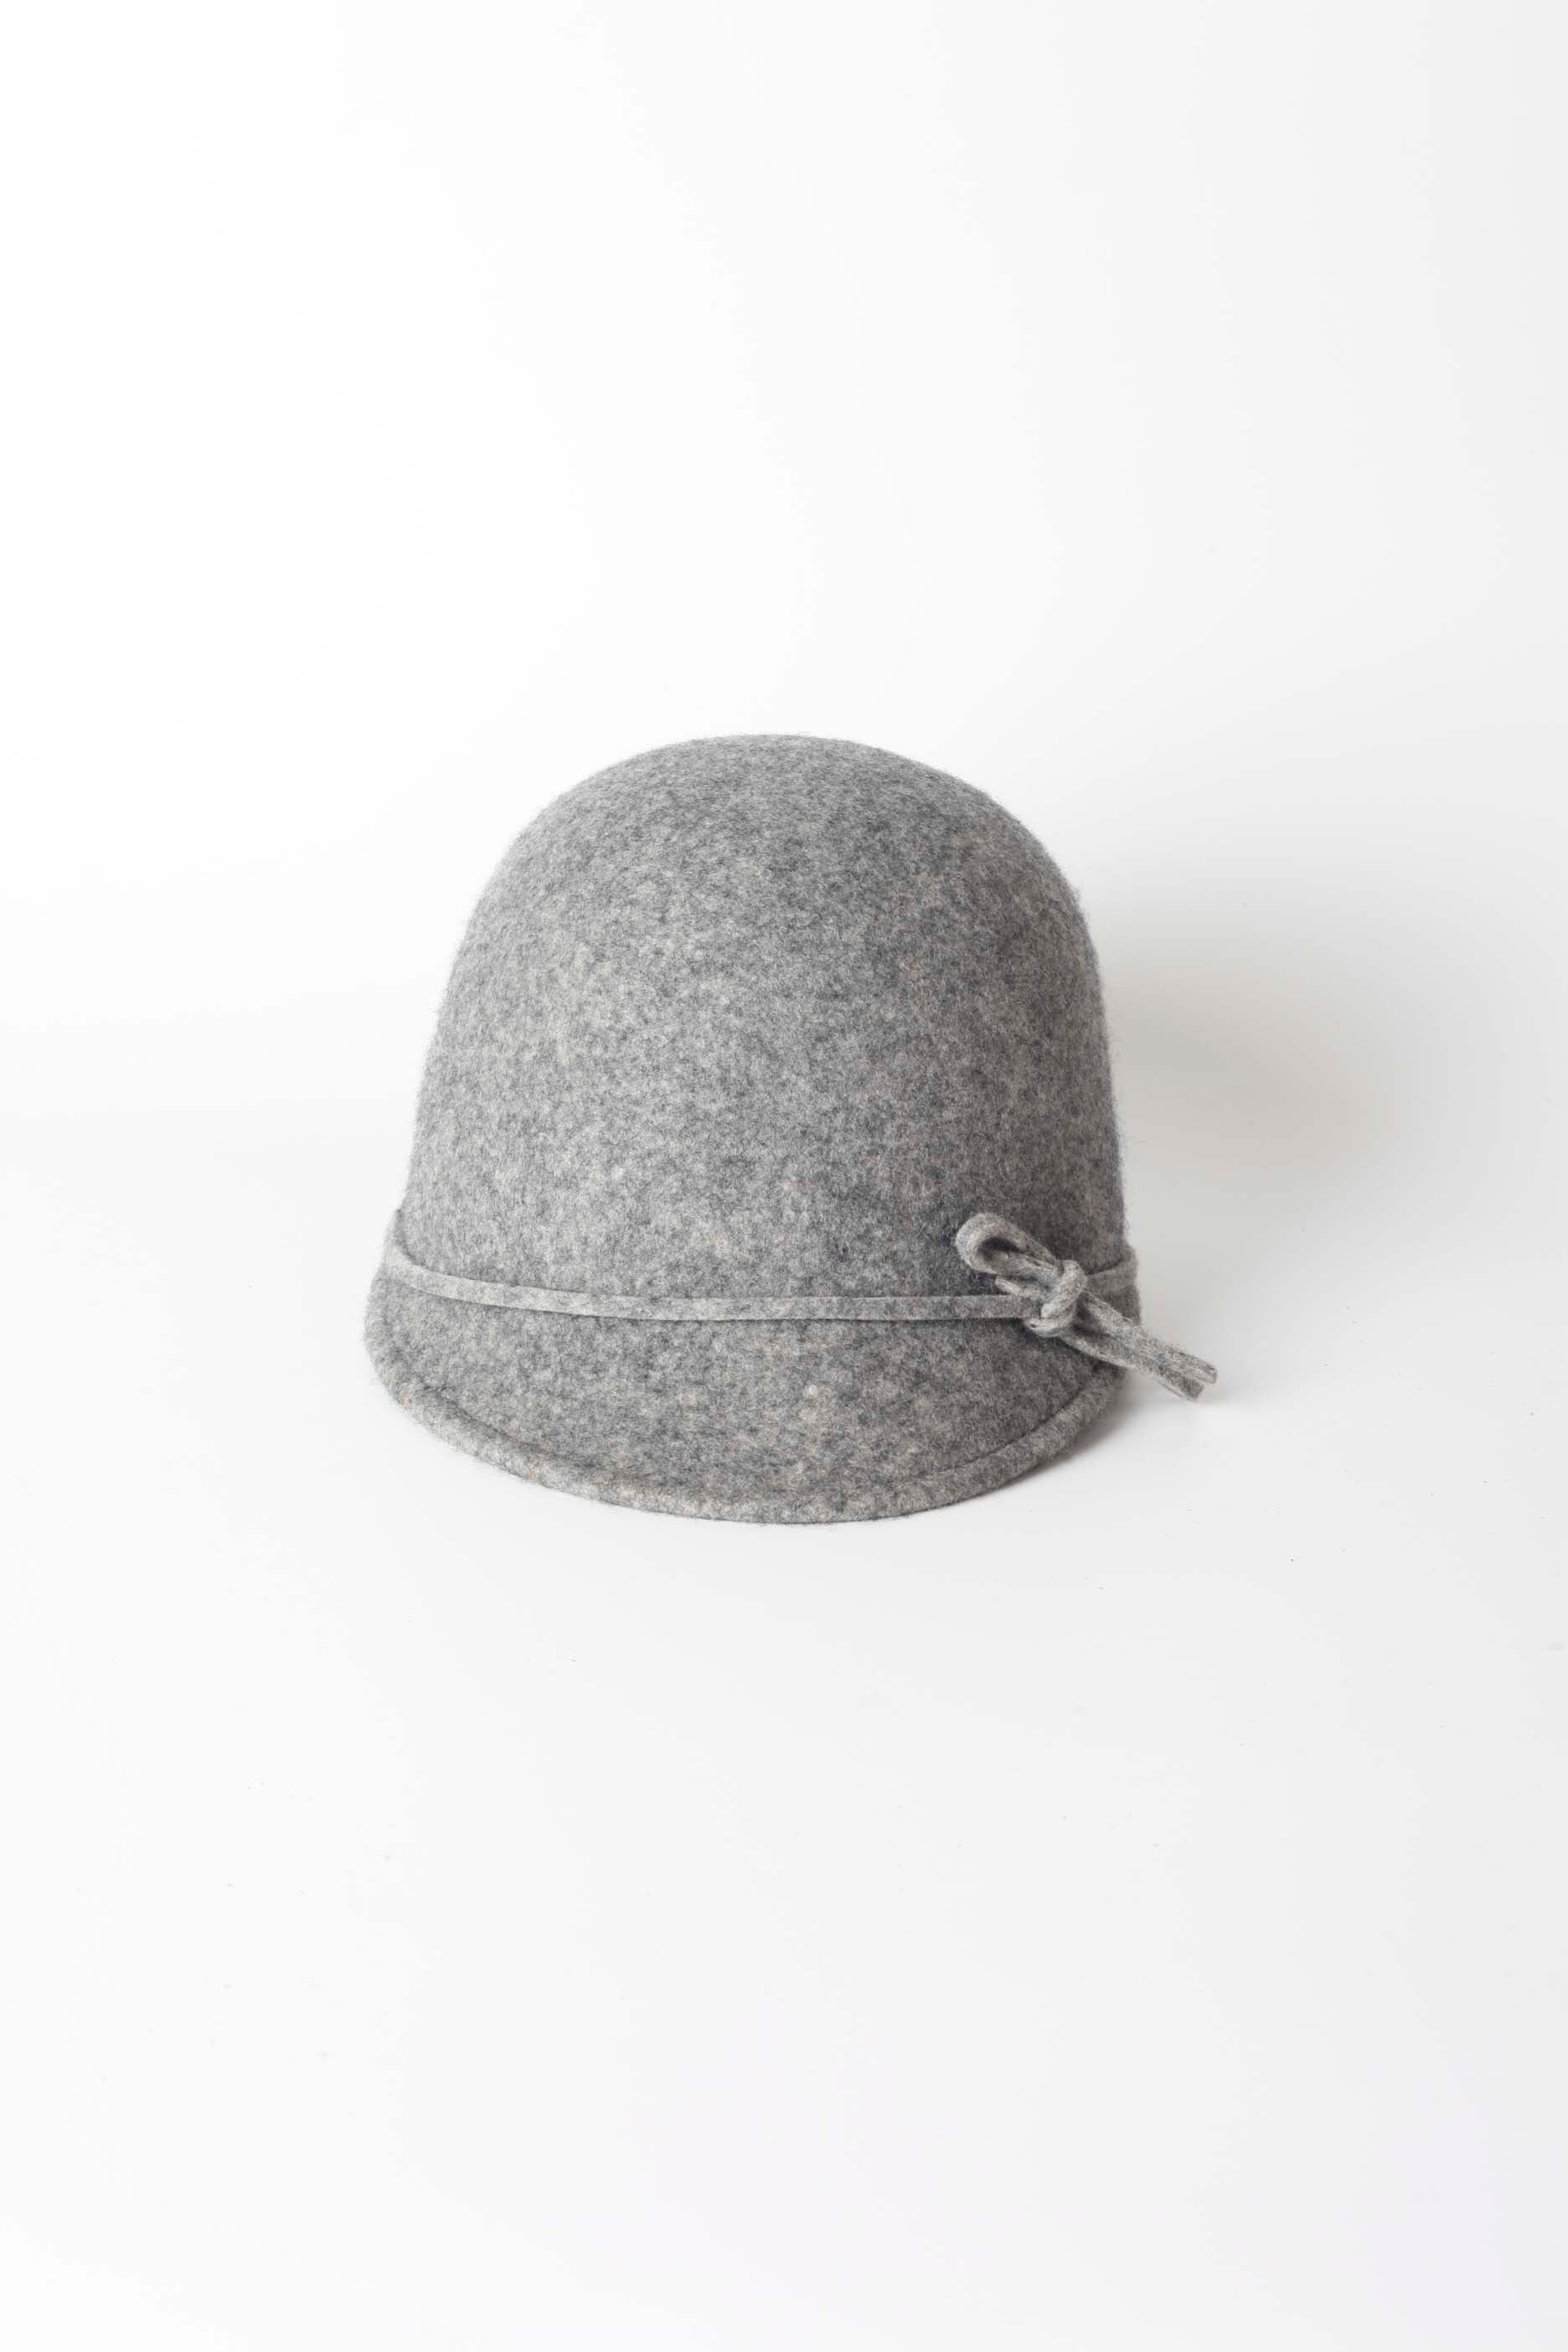 Girls Grey Felt Cloche Hat